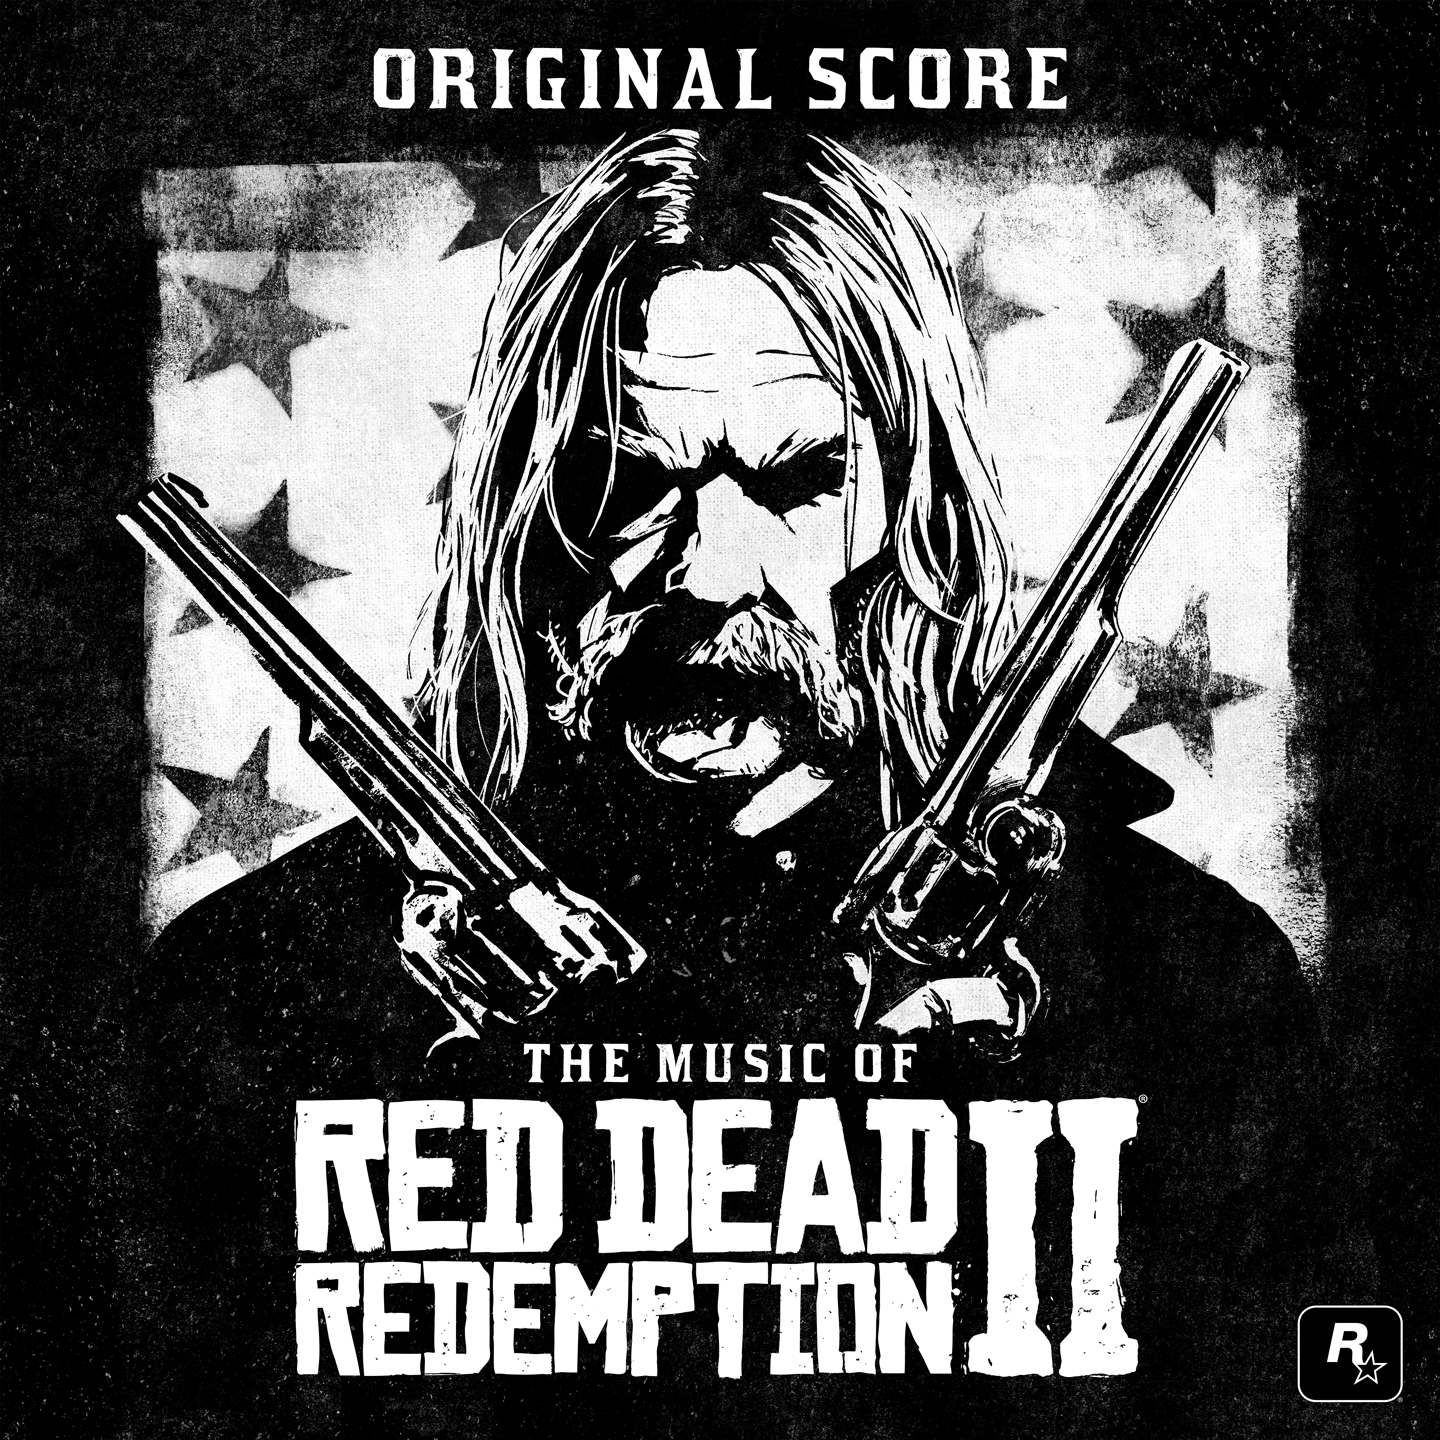 Состоялся релиз альбома The Music of Red Dead Redemption 2: Original Score